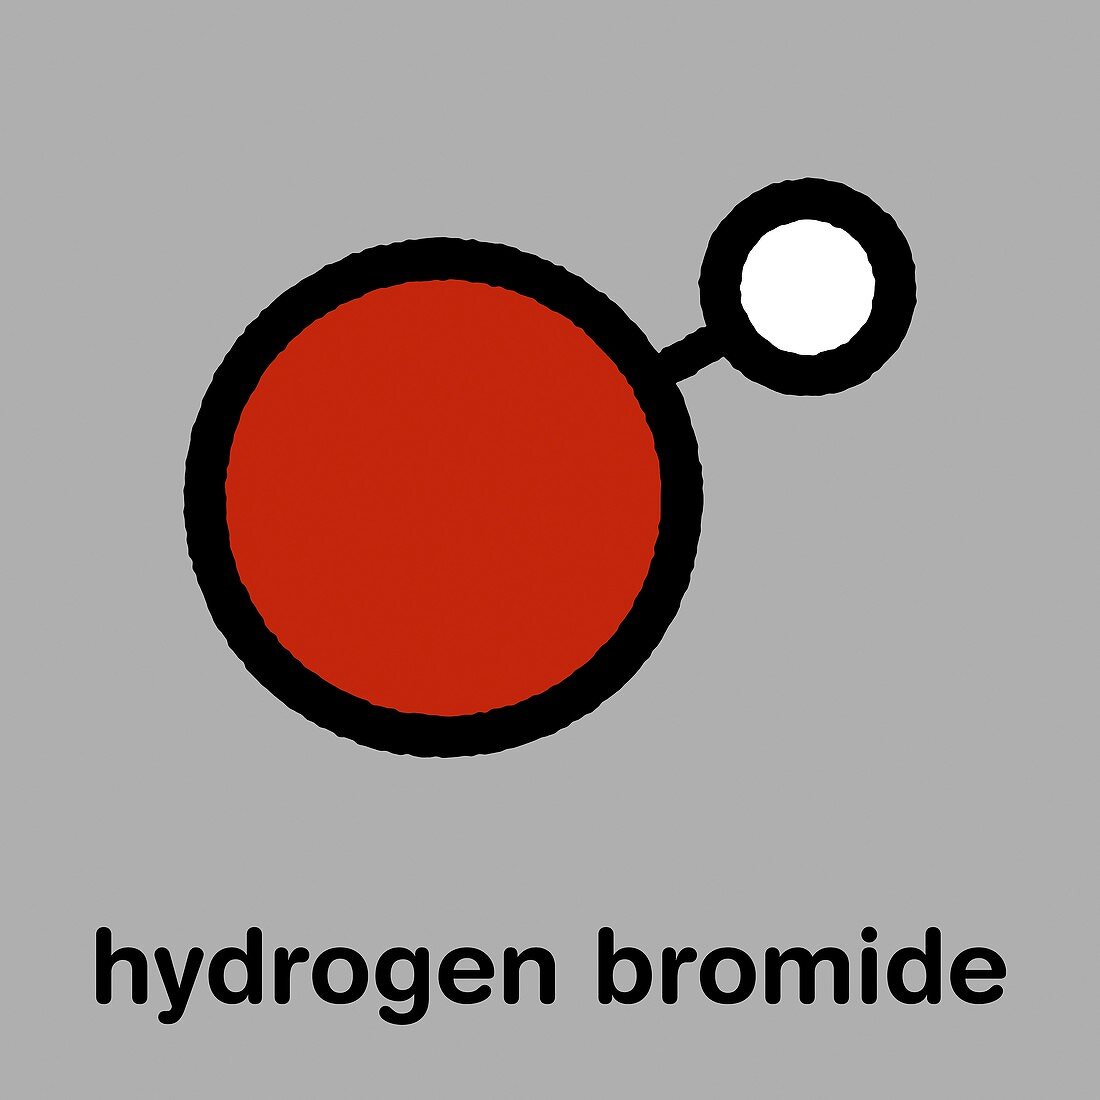 Hydrogen bromide molecule, illustration